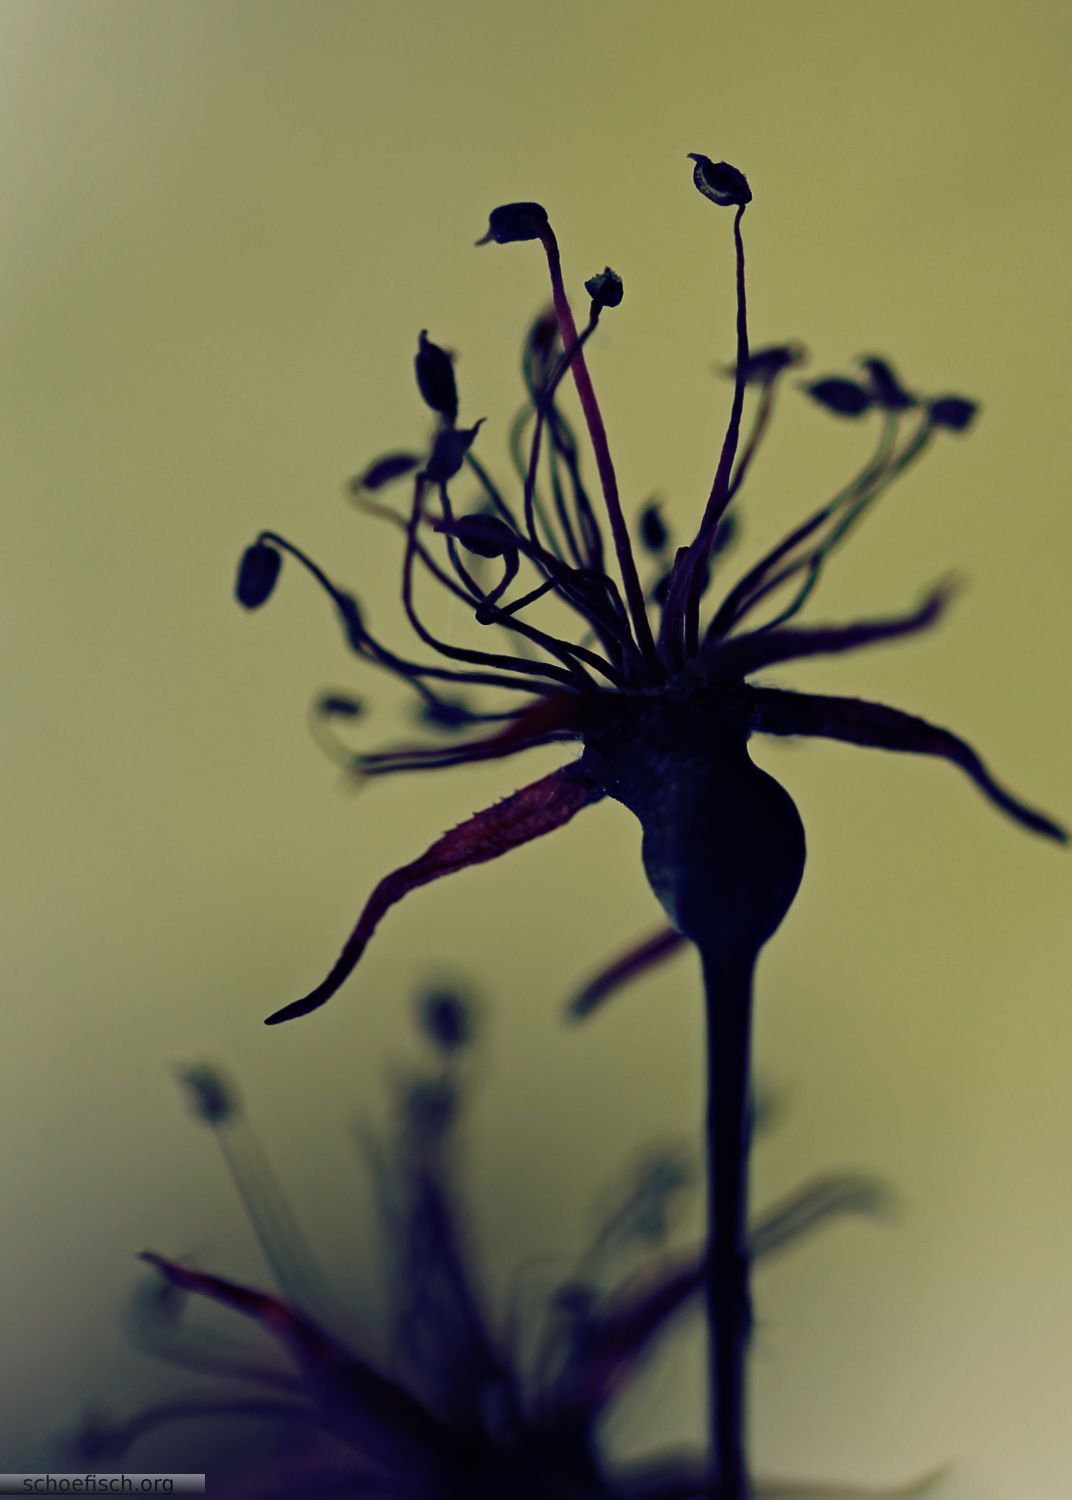 dark flora macro photography from Steve Schoefisch